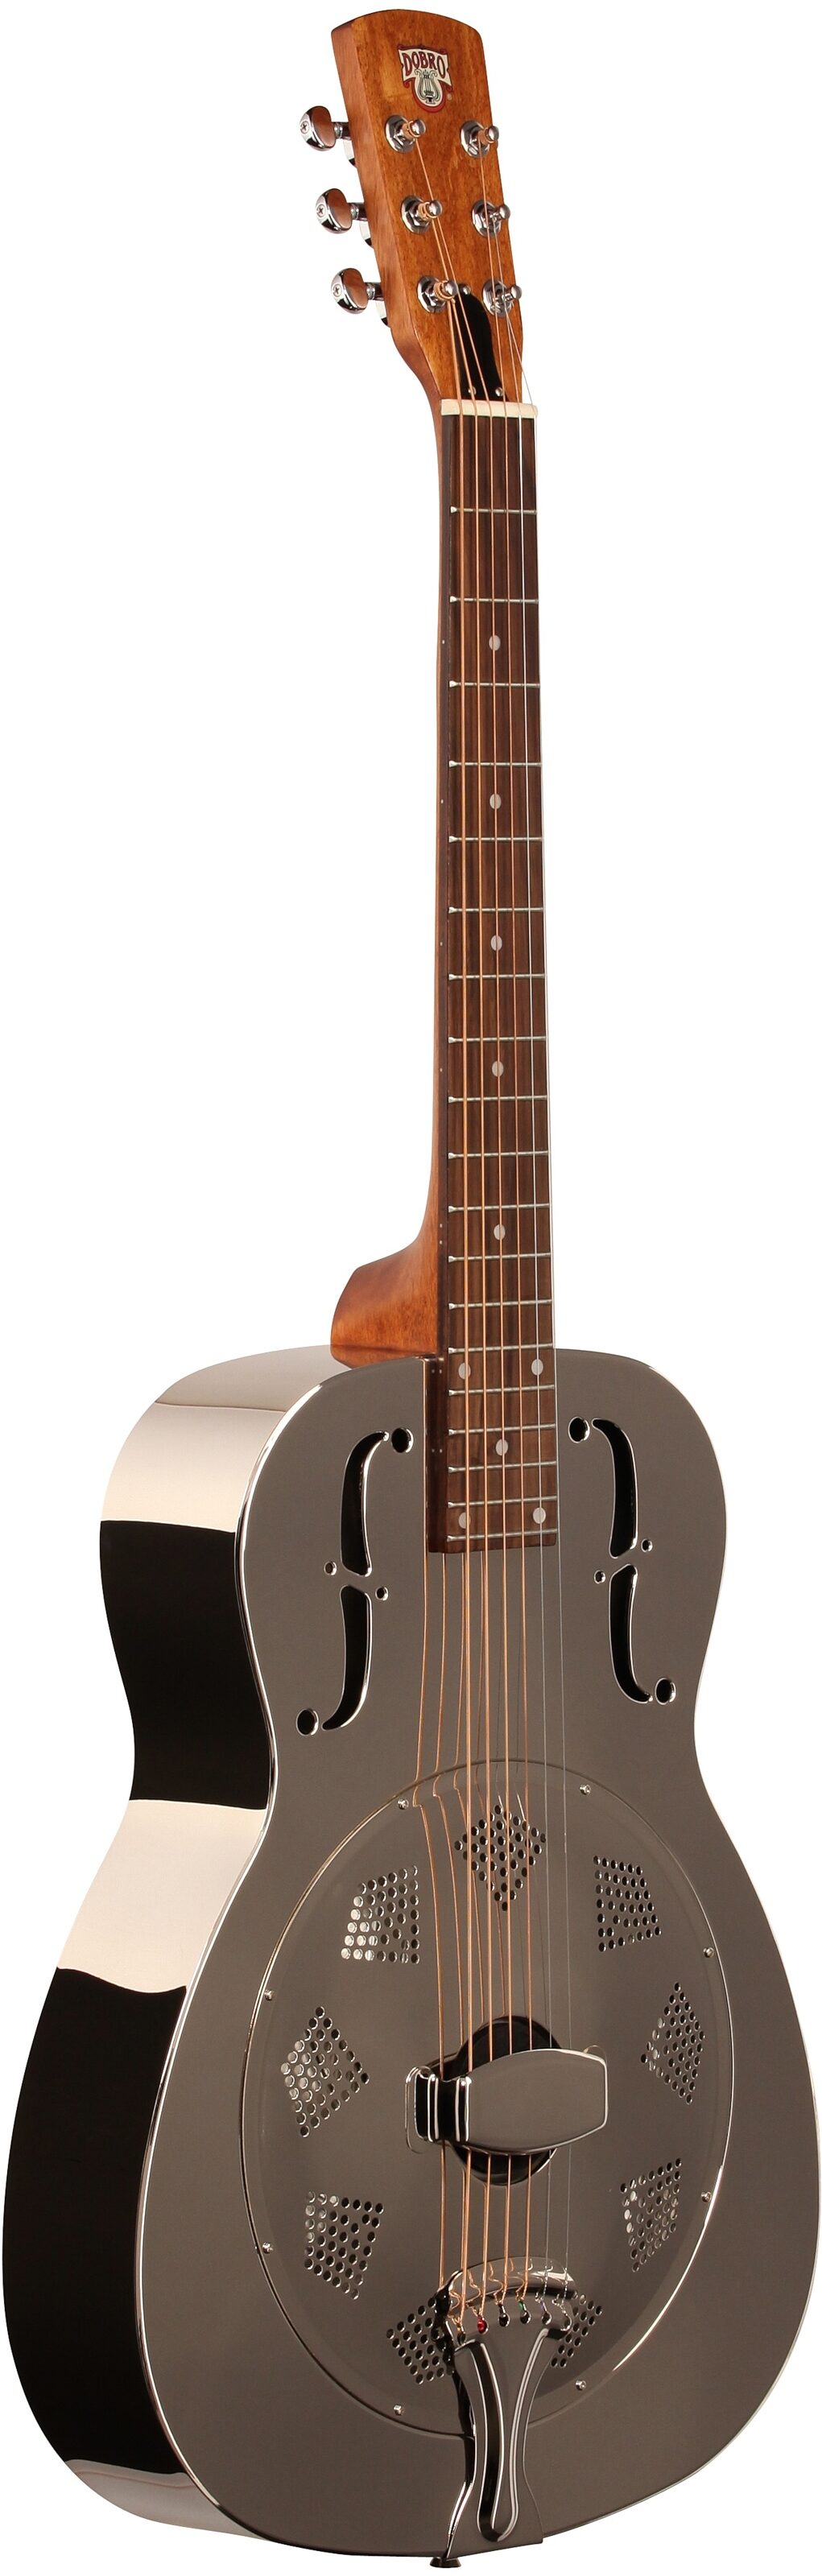 Epiphone Dobro Hound Dog M-14 Metalbody Resonator Guitar